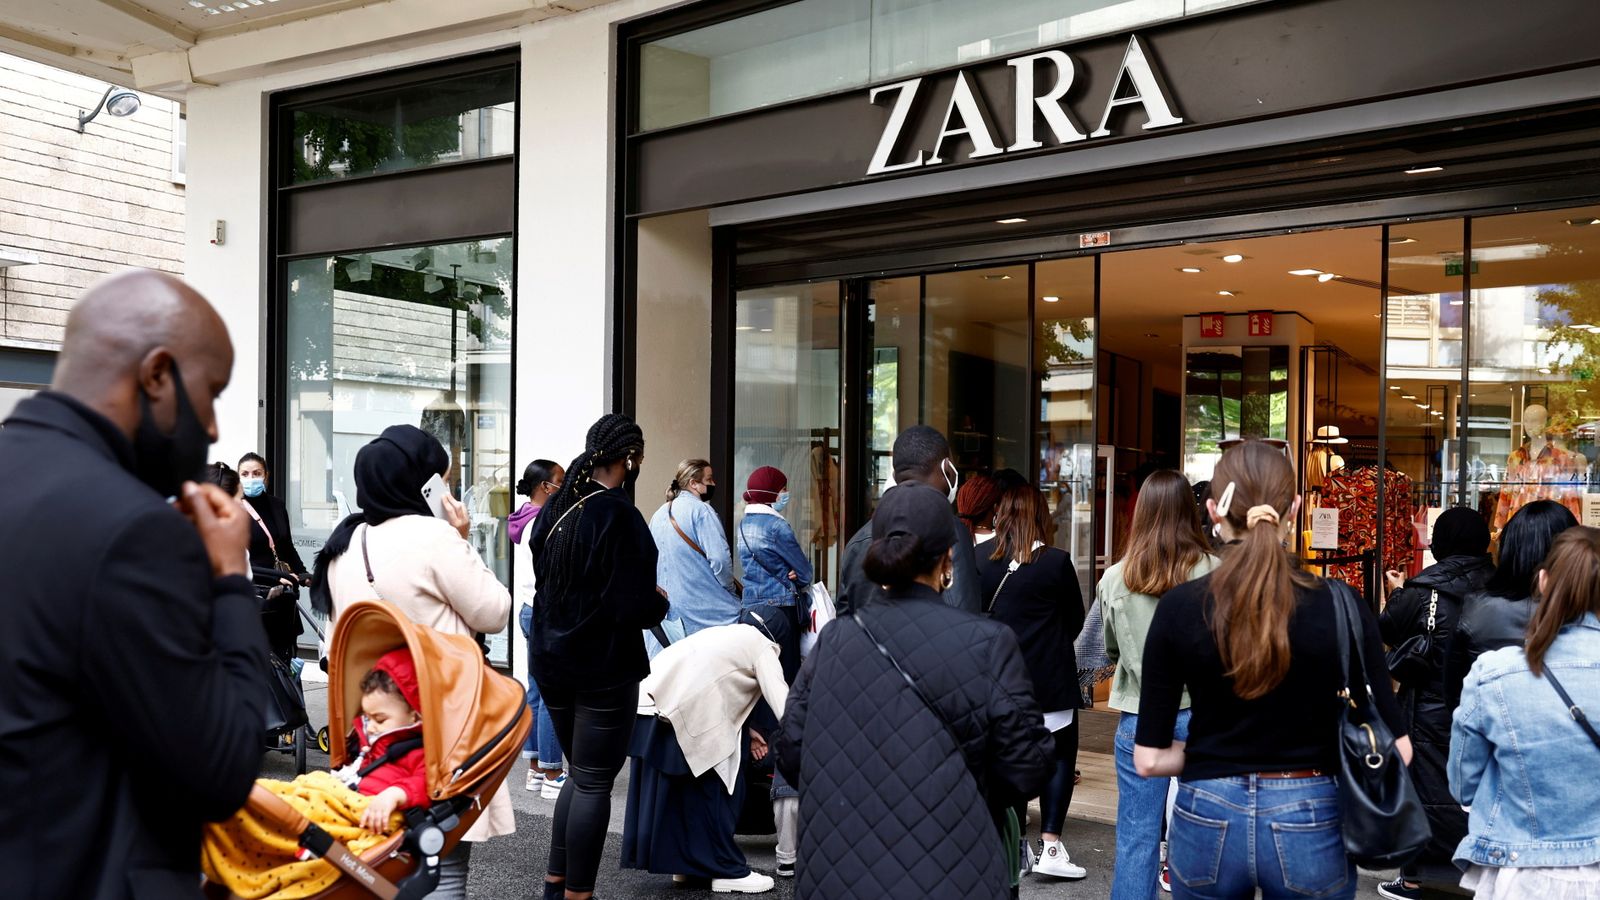 COVID19 Zara owner Inditex sees global sales top prepandemic levels